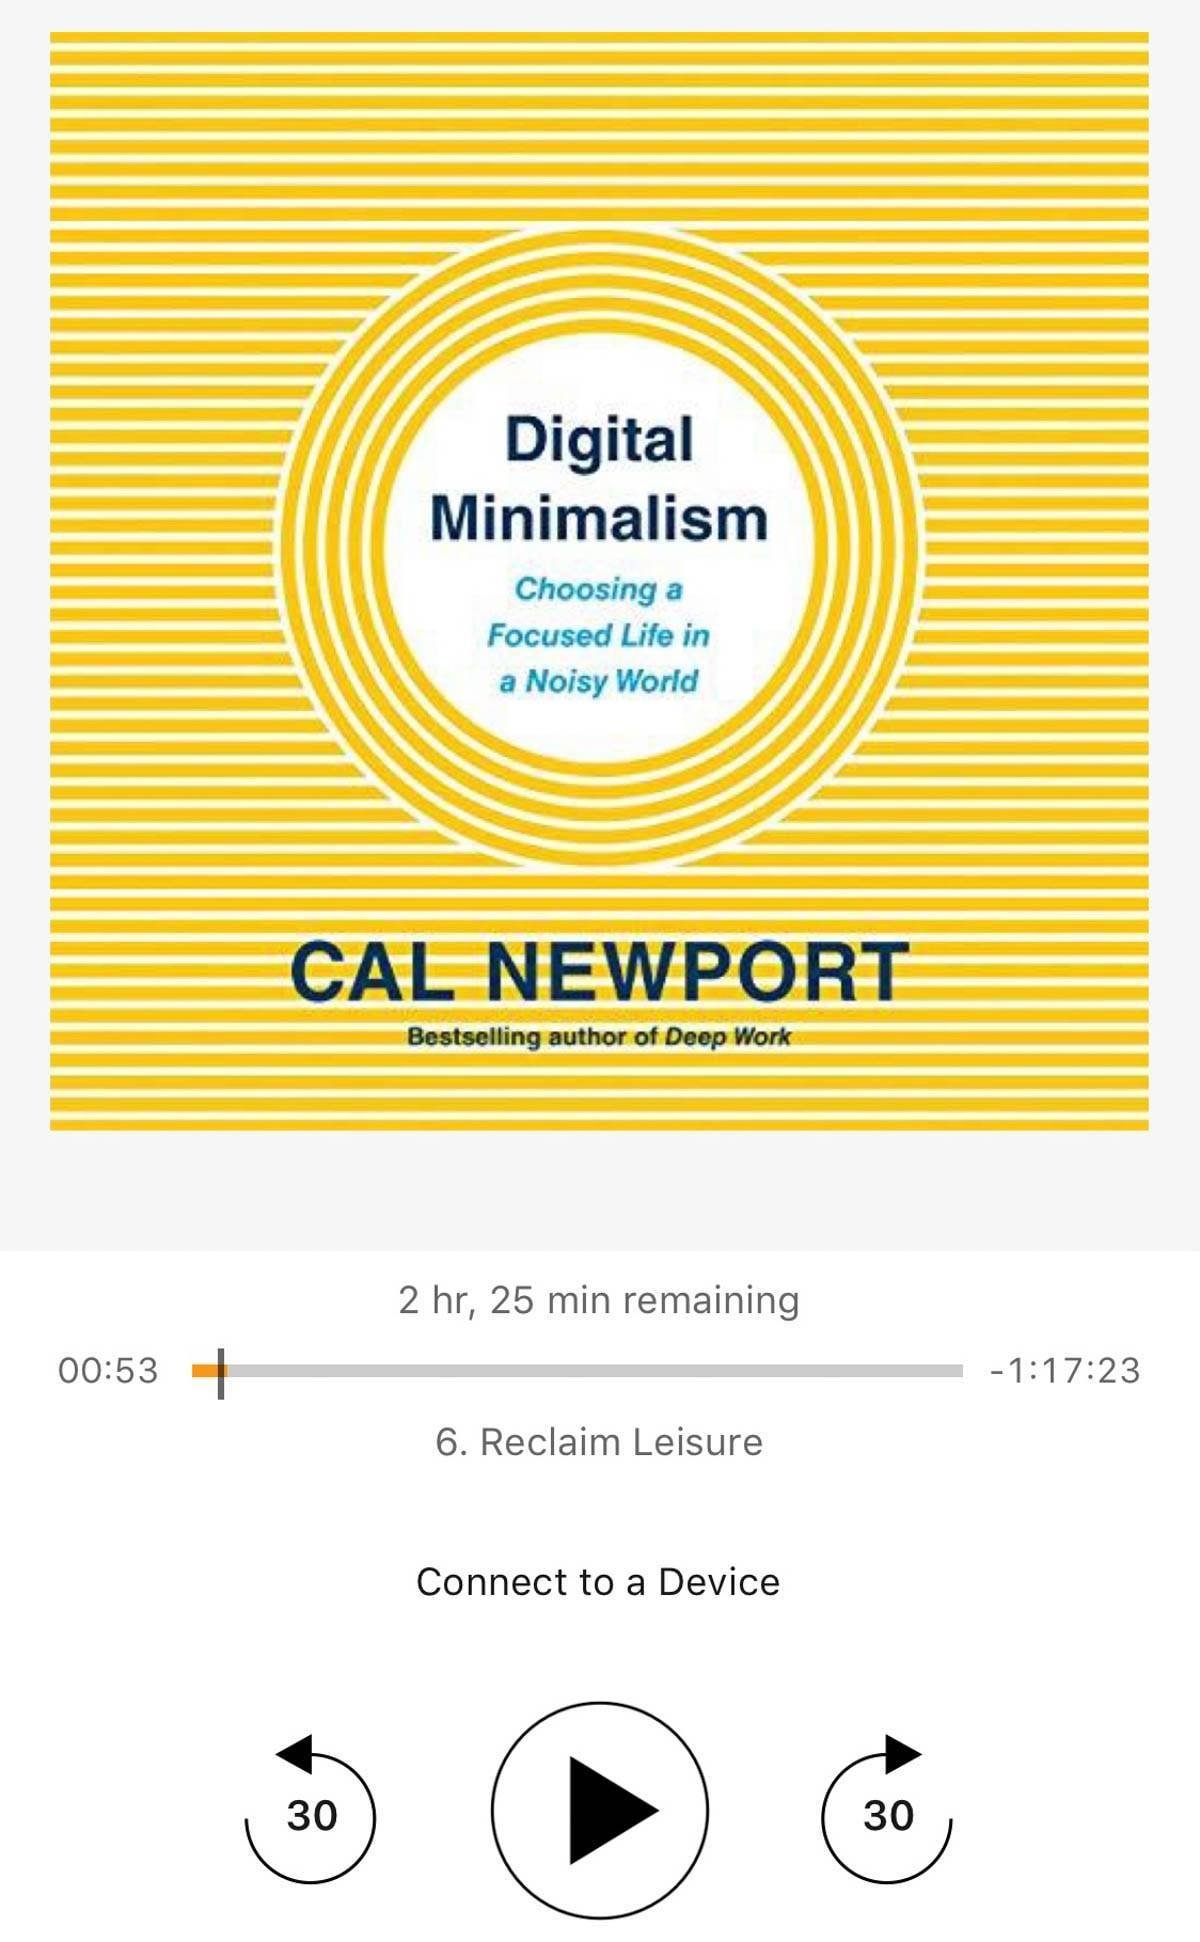 Digital Minimalism audiobook.